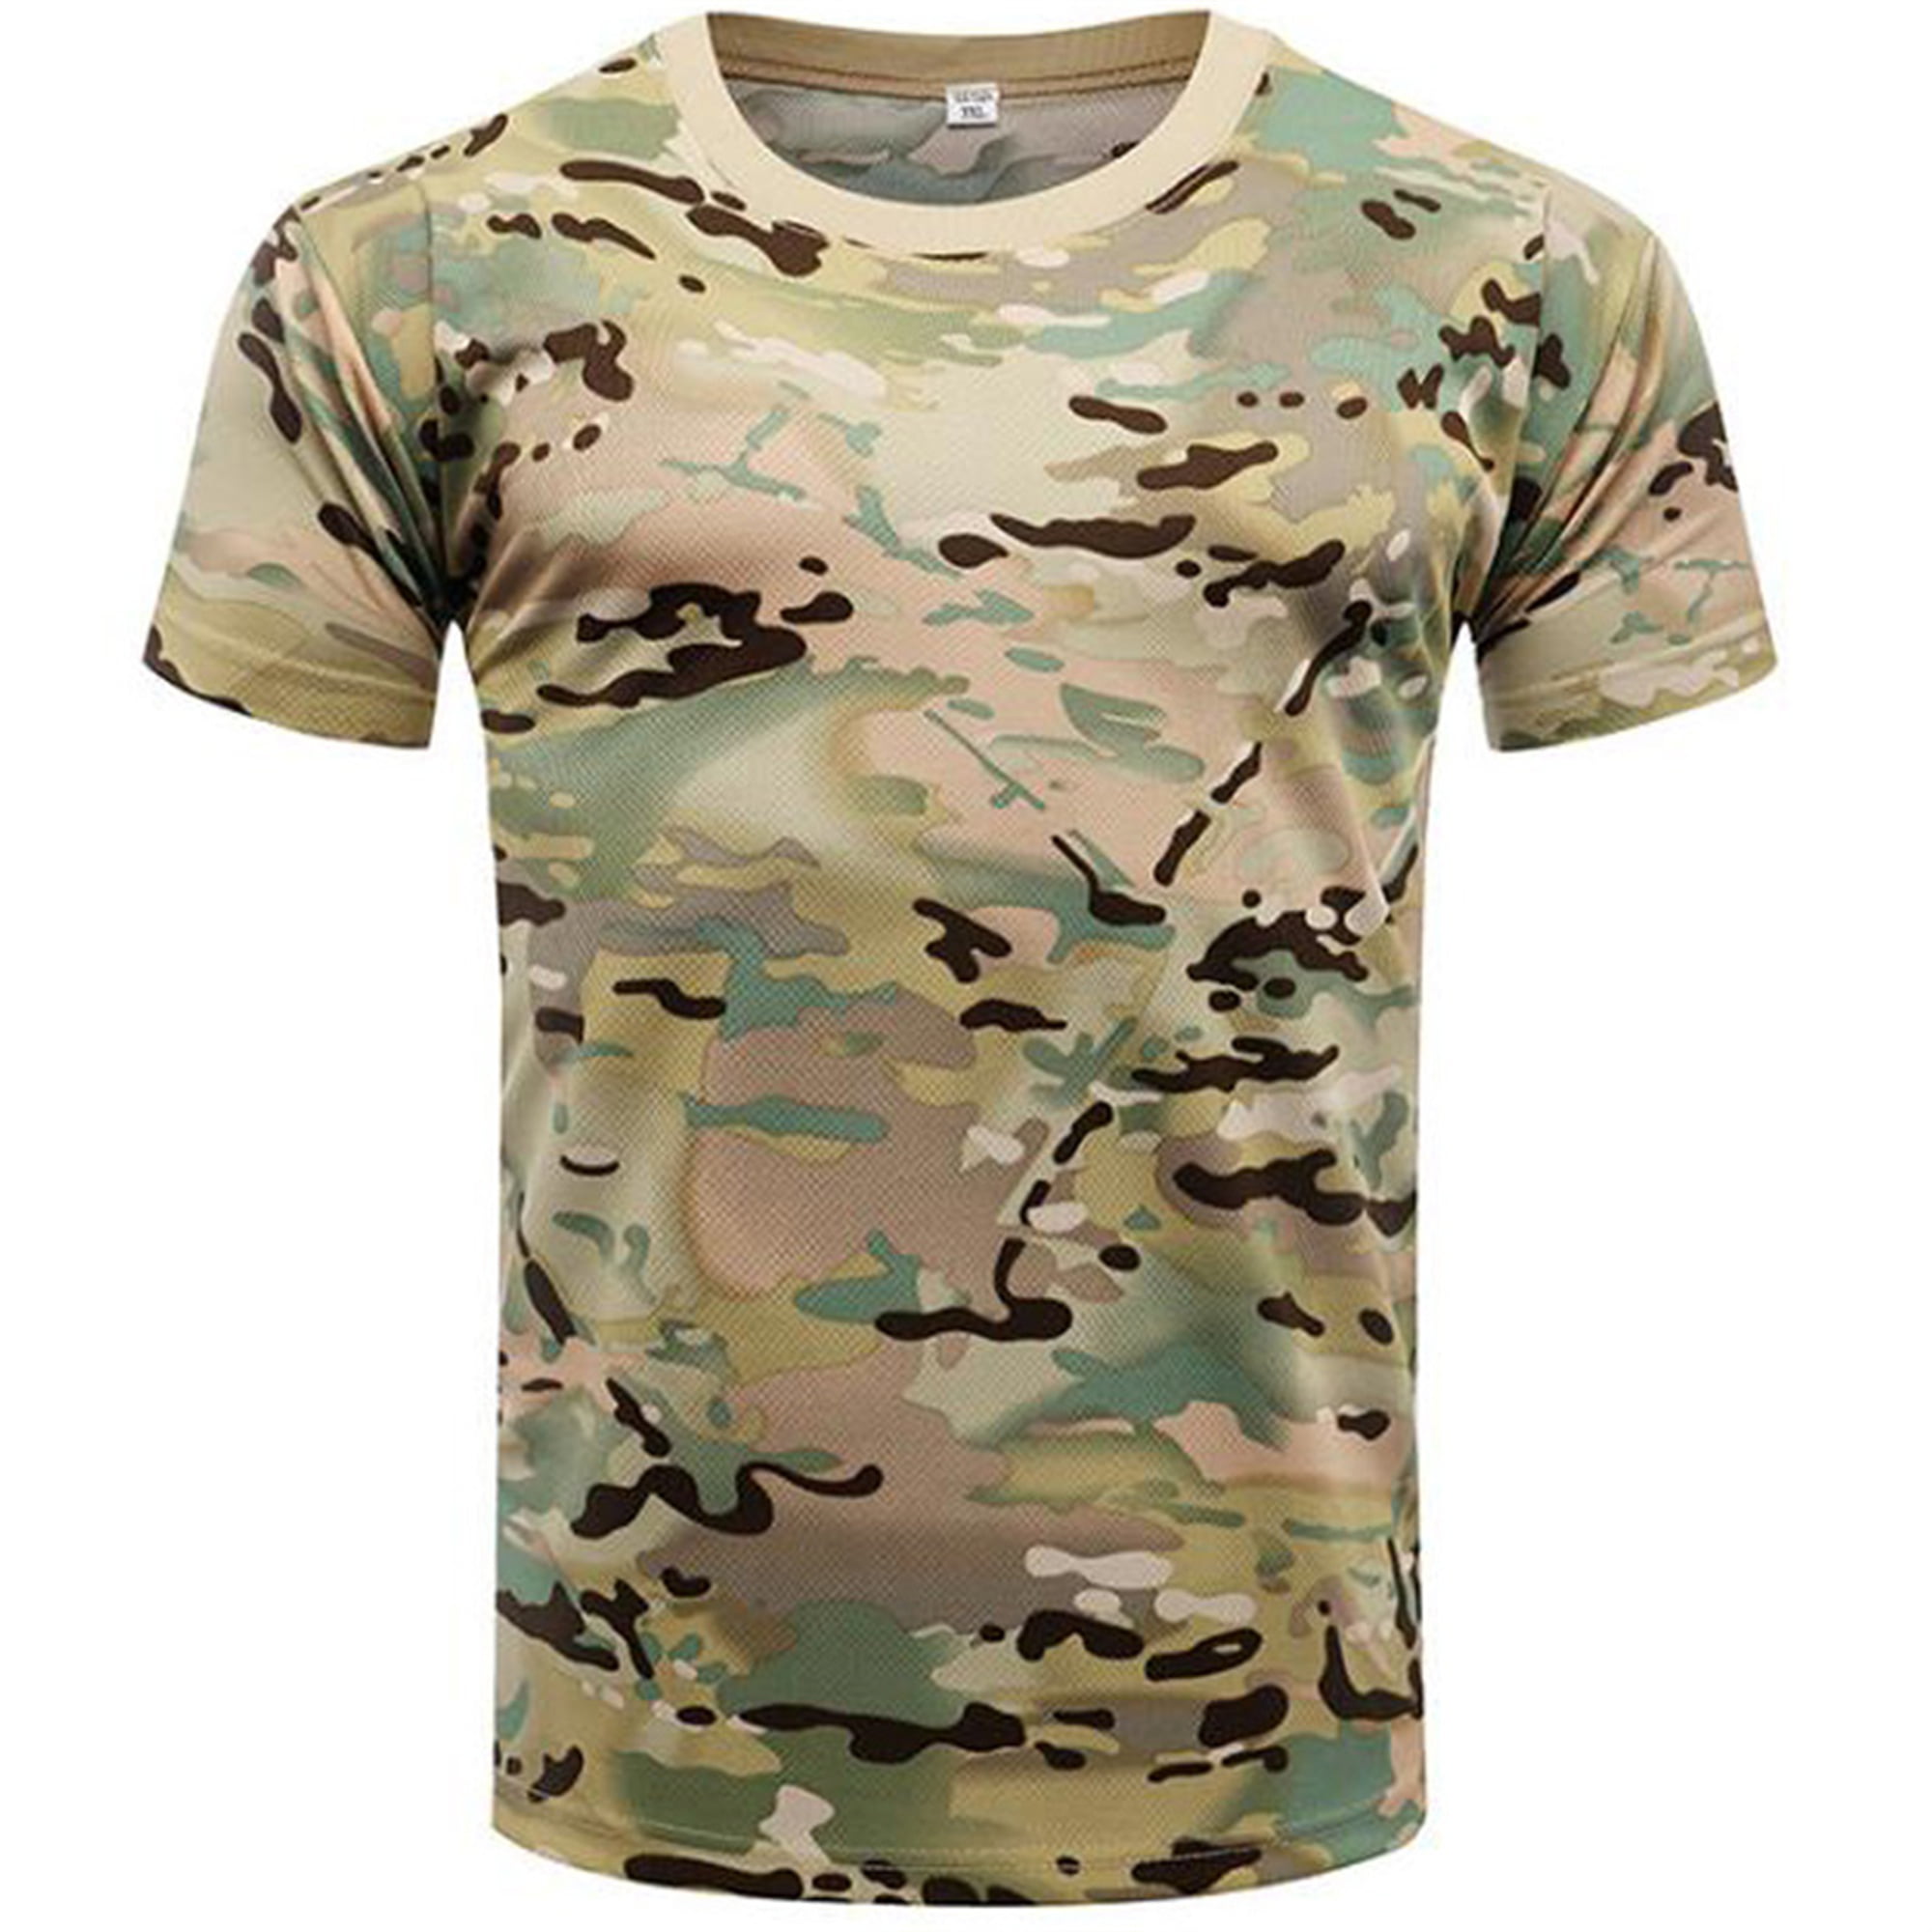 Mens Military Camo T-Shirt Short Sleeve Camo Shirts Combat Casual Blouse Tee Top 